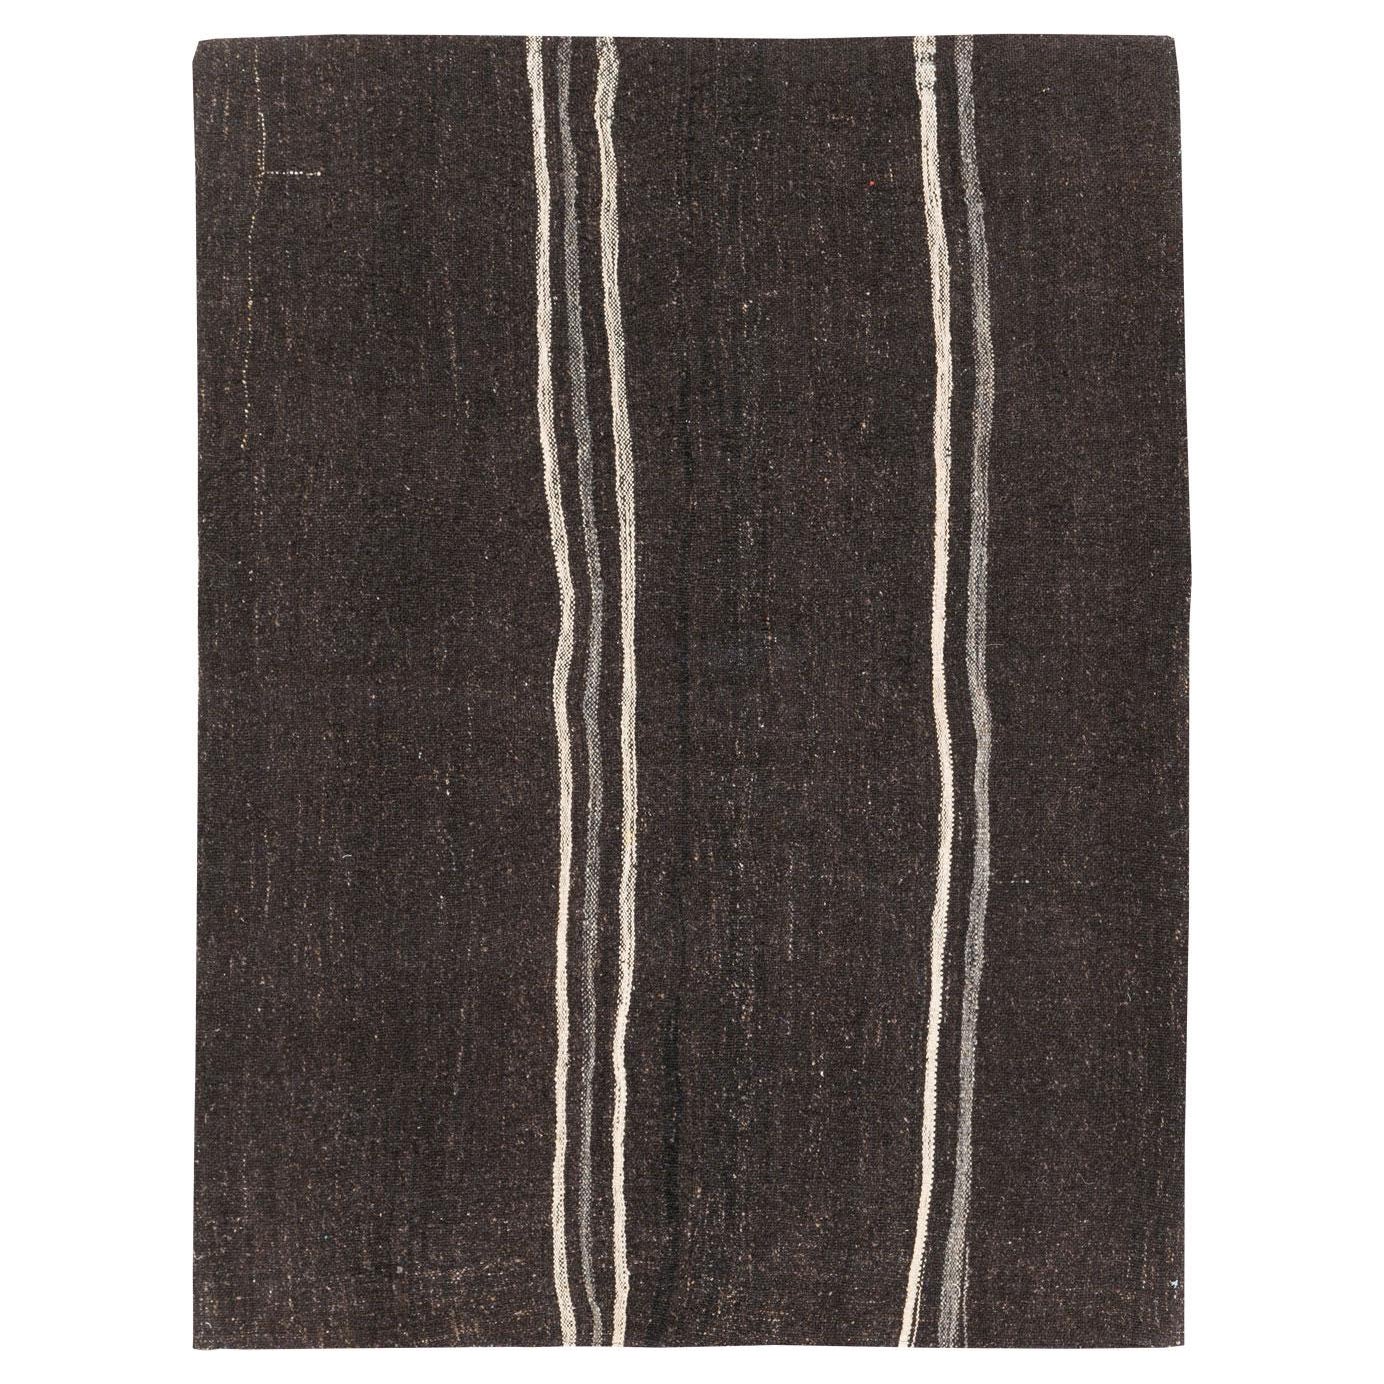 Mid-20th Century Handmade Turkish Flatweave Kilim Throw Rug In Brown-Black For Sale